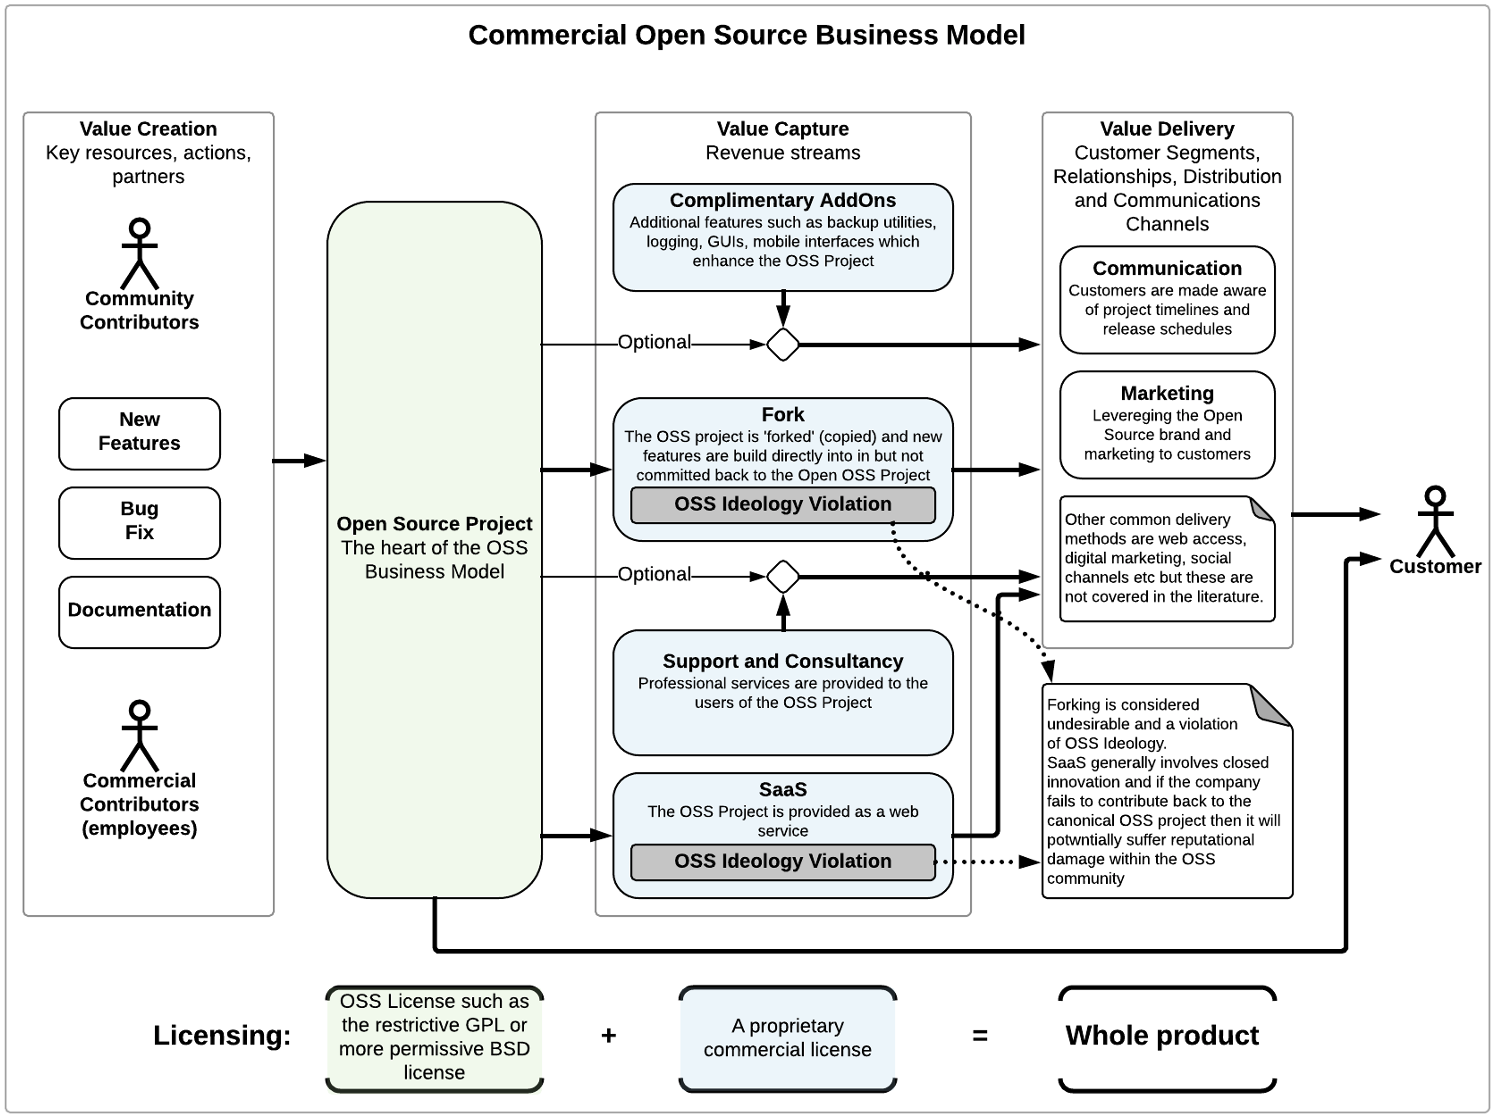 COSS Business Model